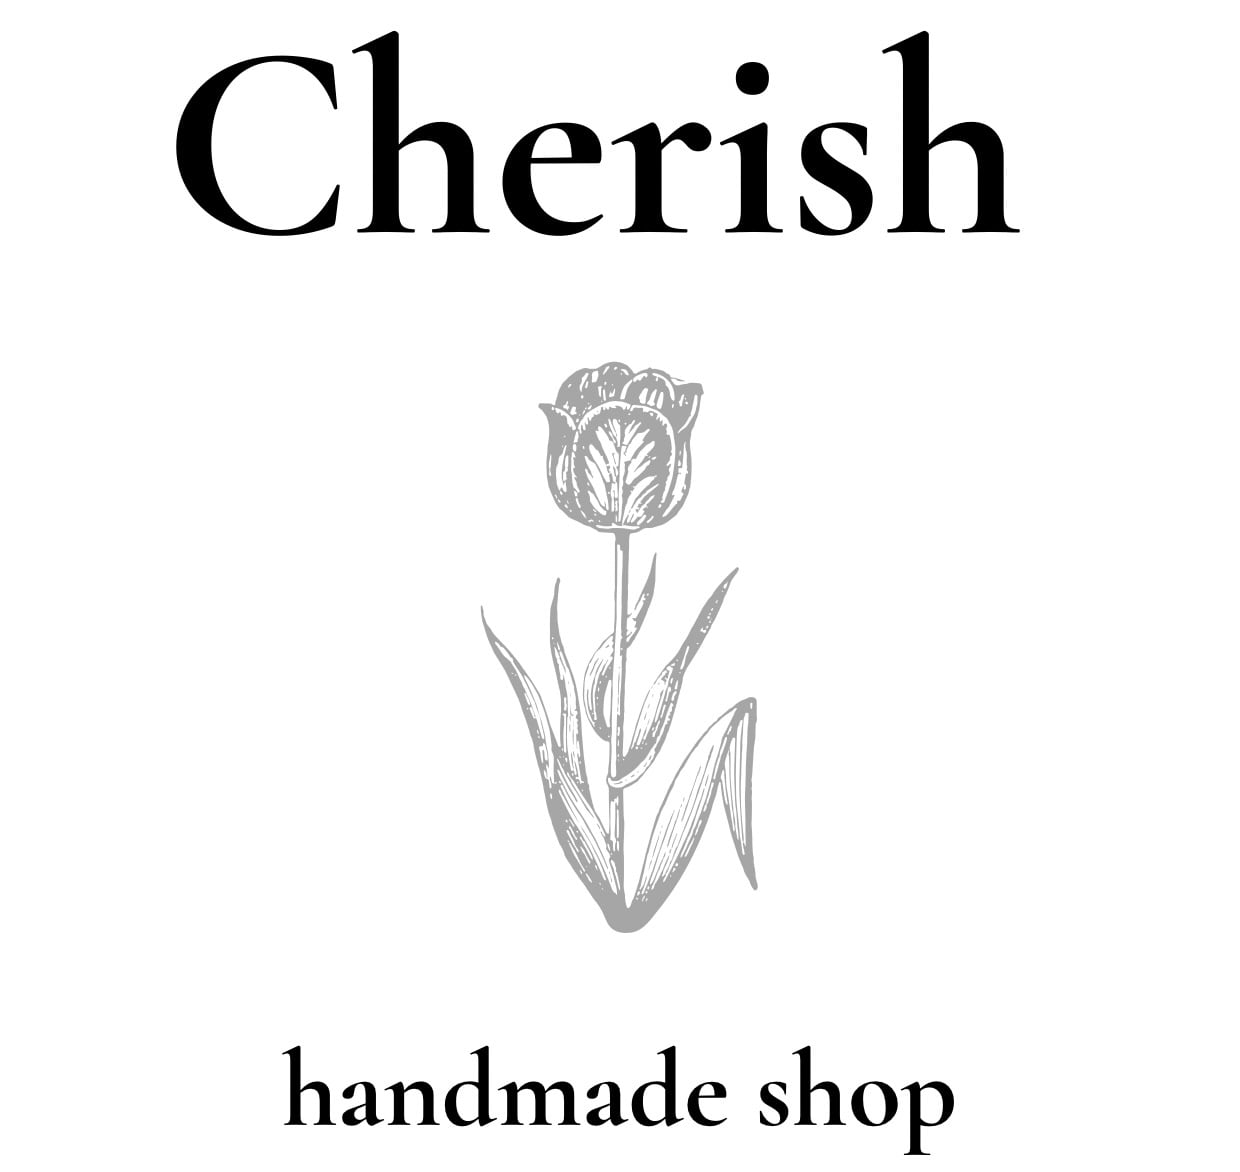 Cherish／handmade shop